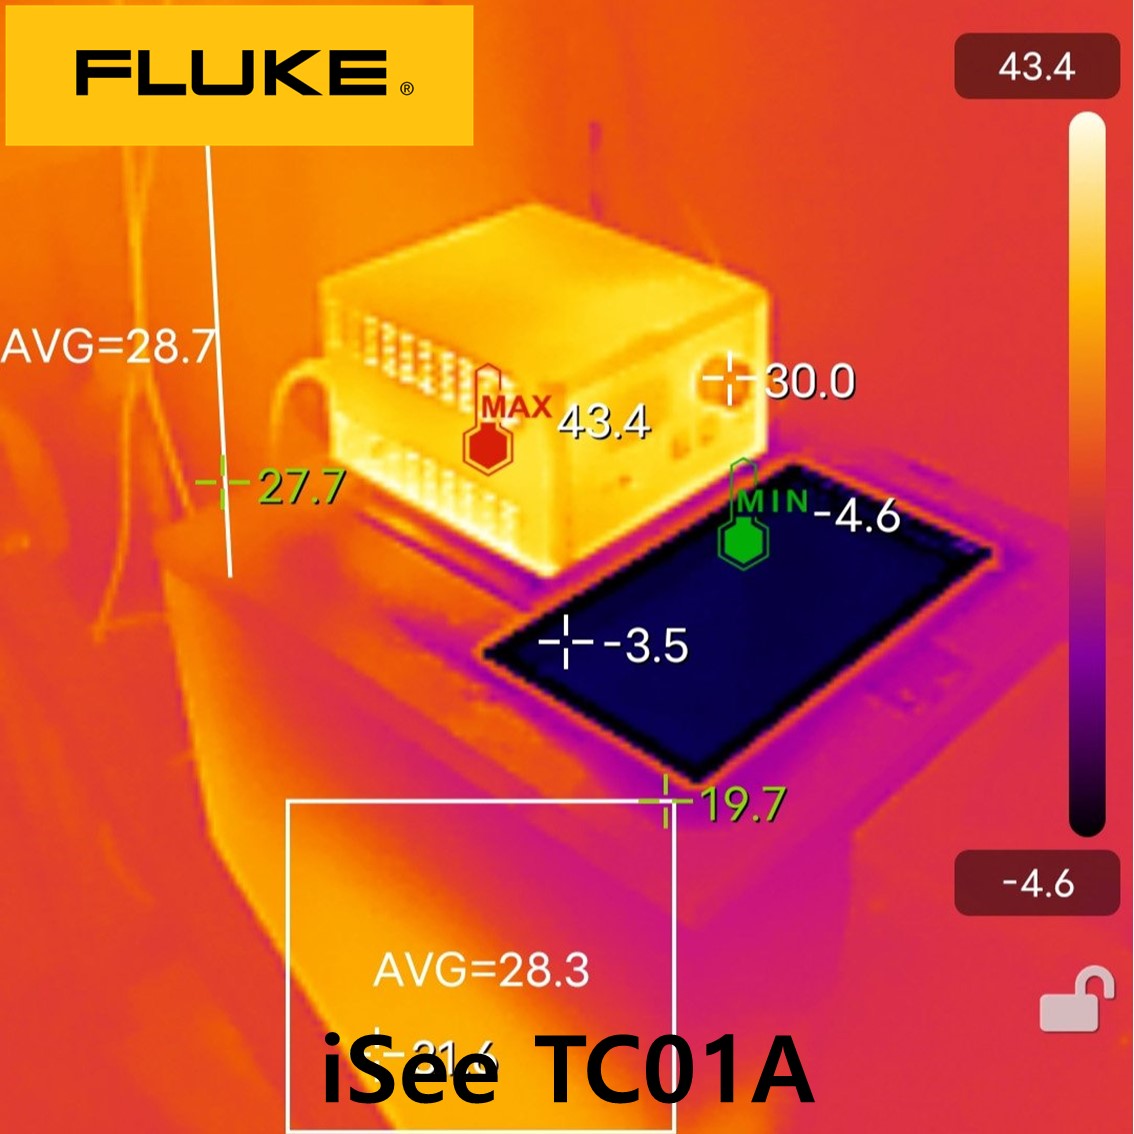 [ Fluke iSee ] 플루크 열화상 카메라, 휴대폰 열화상카메라 TC01A (-10~550℃)